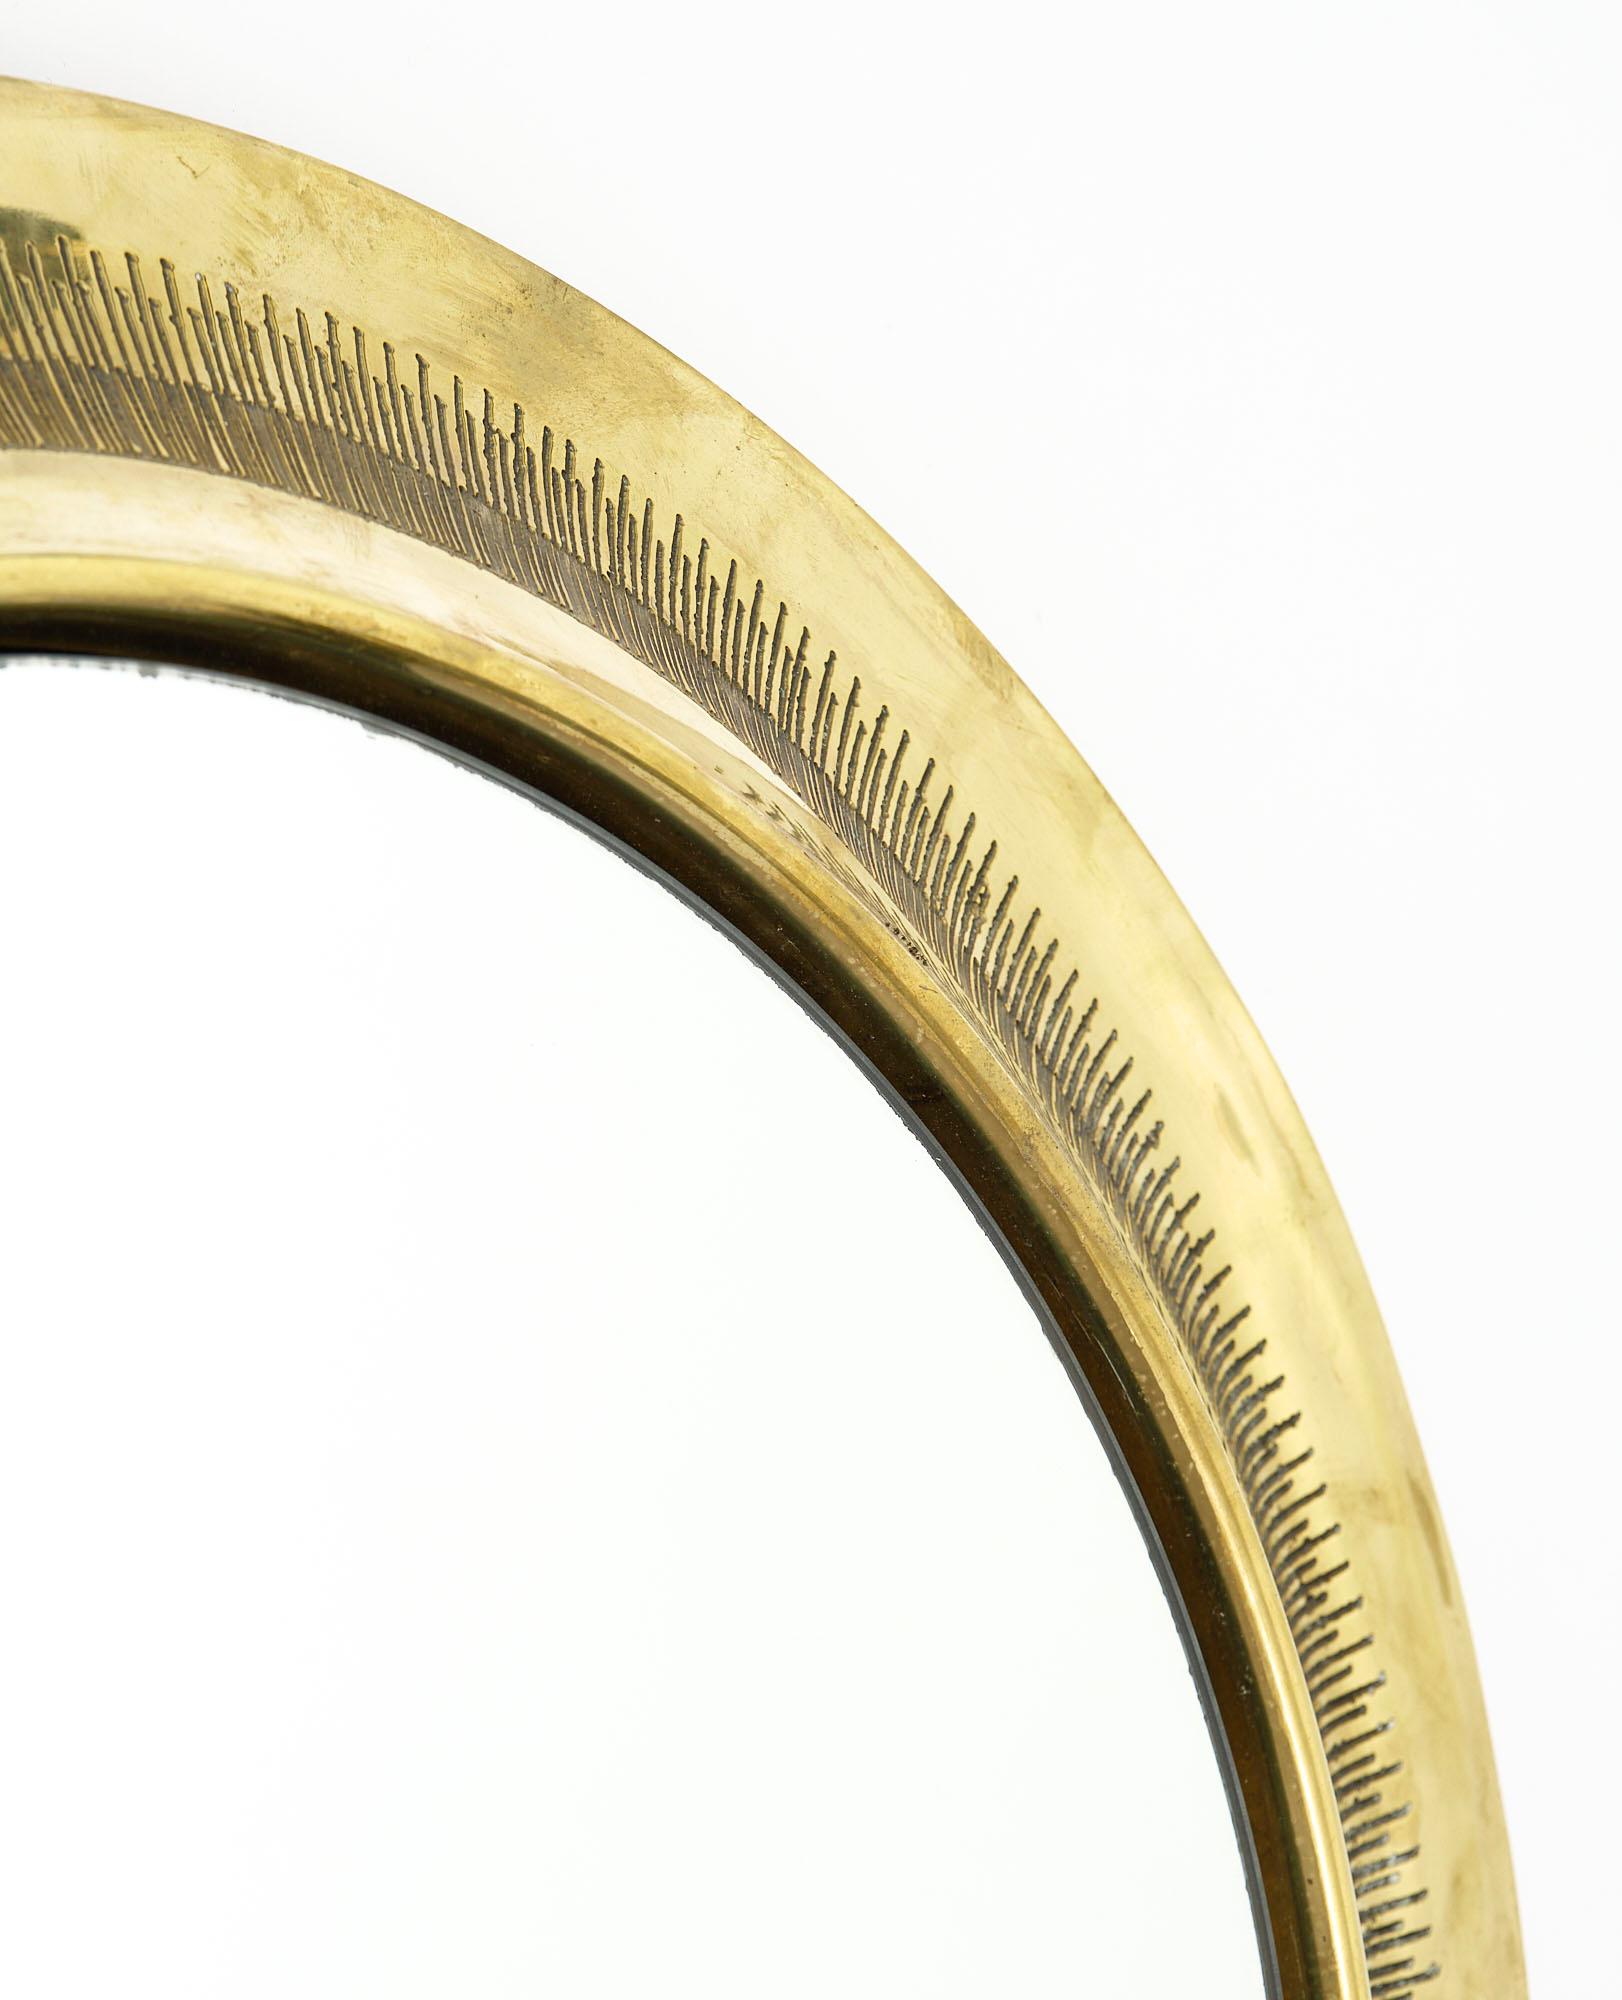 Original antique pressed brass furniture mount mirror cartouche emblem B1 